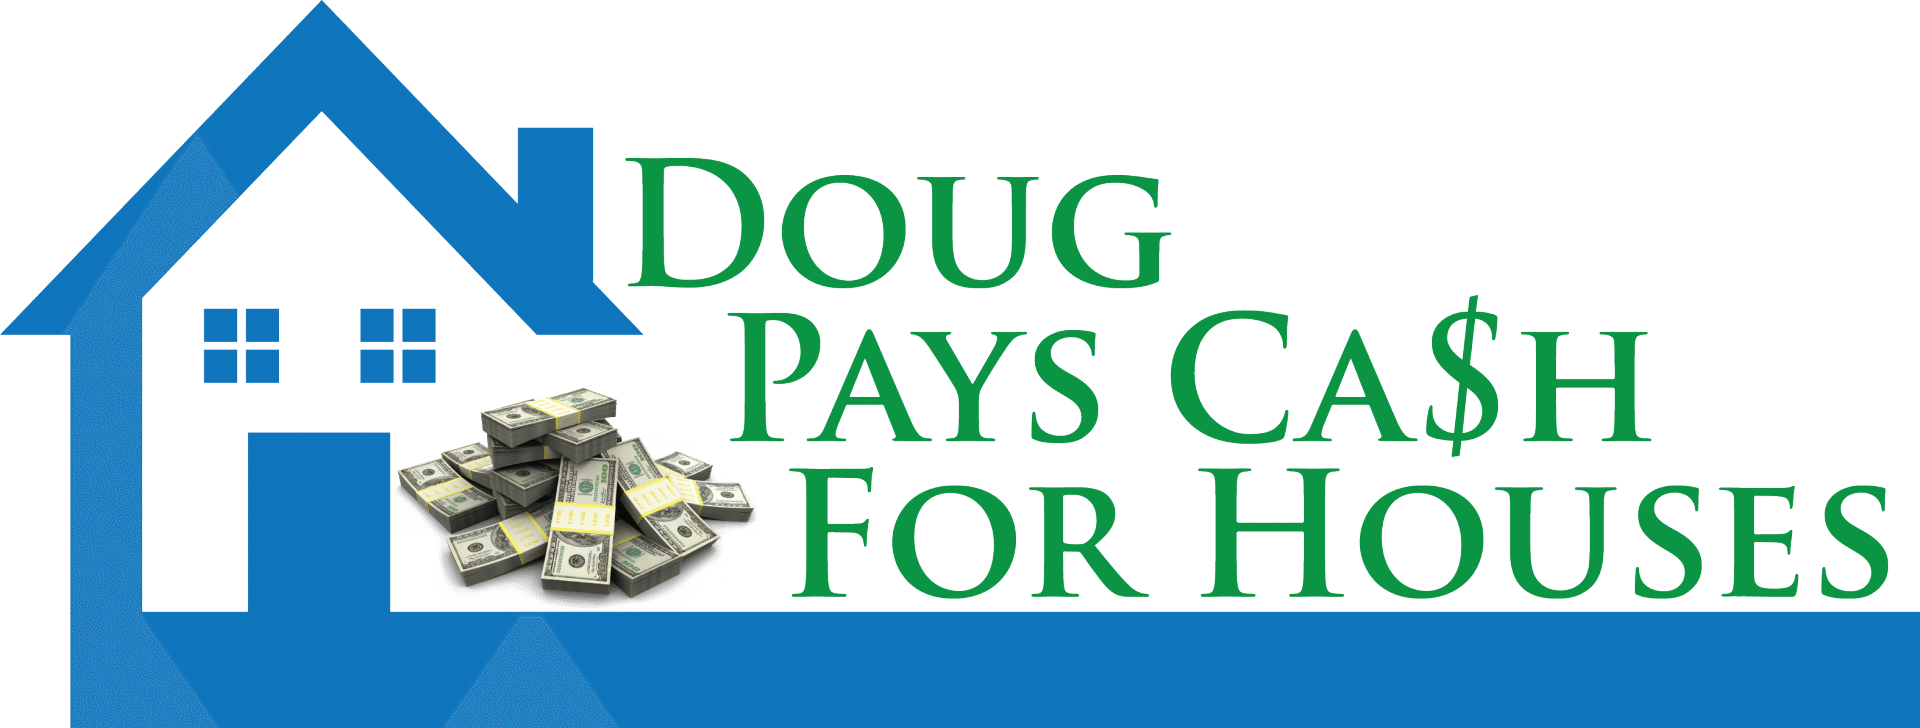 Doug Pays Cash For Houses logo